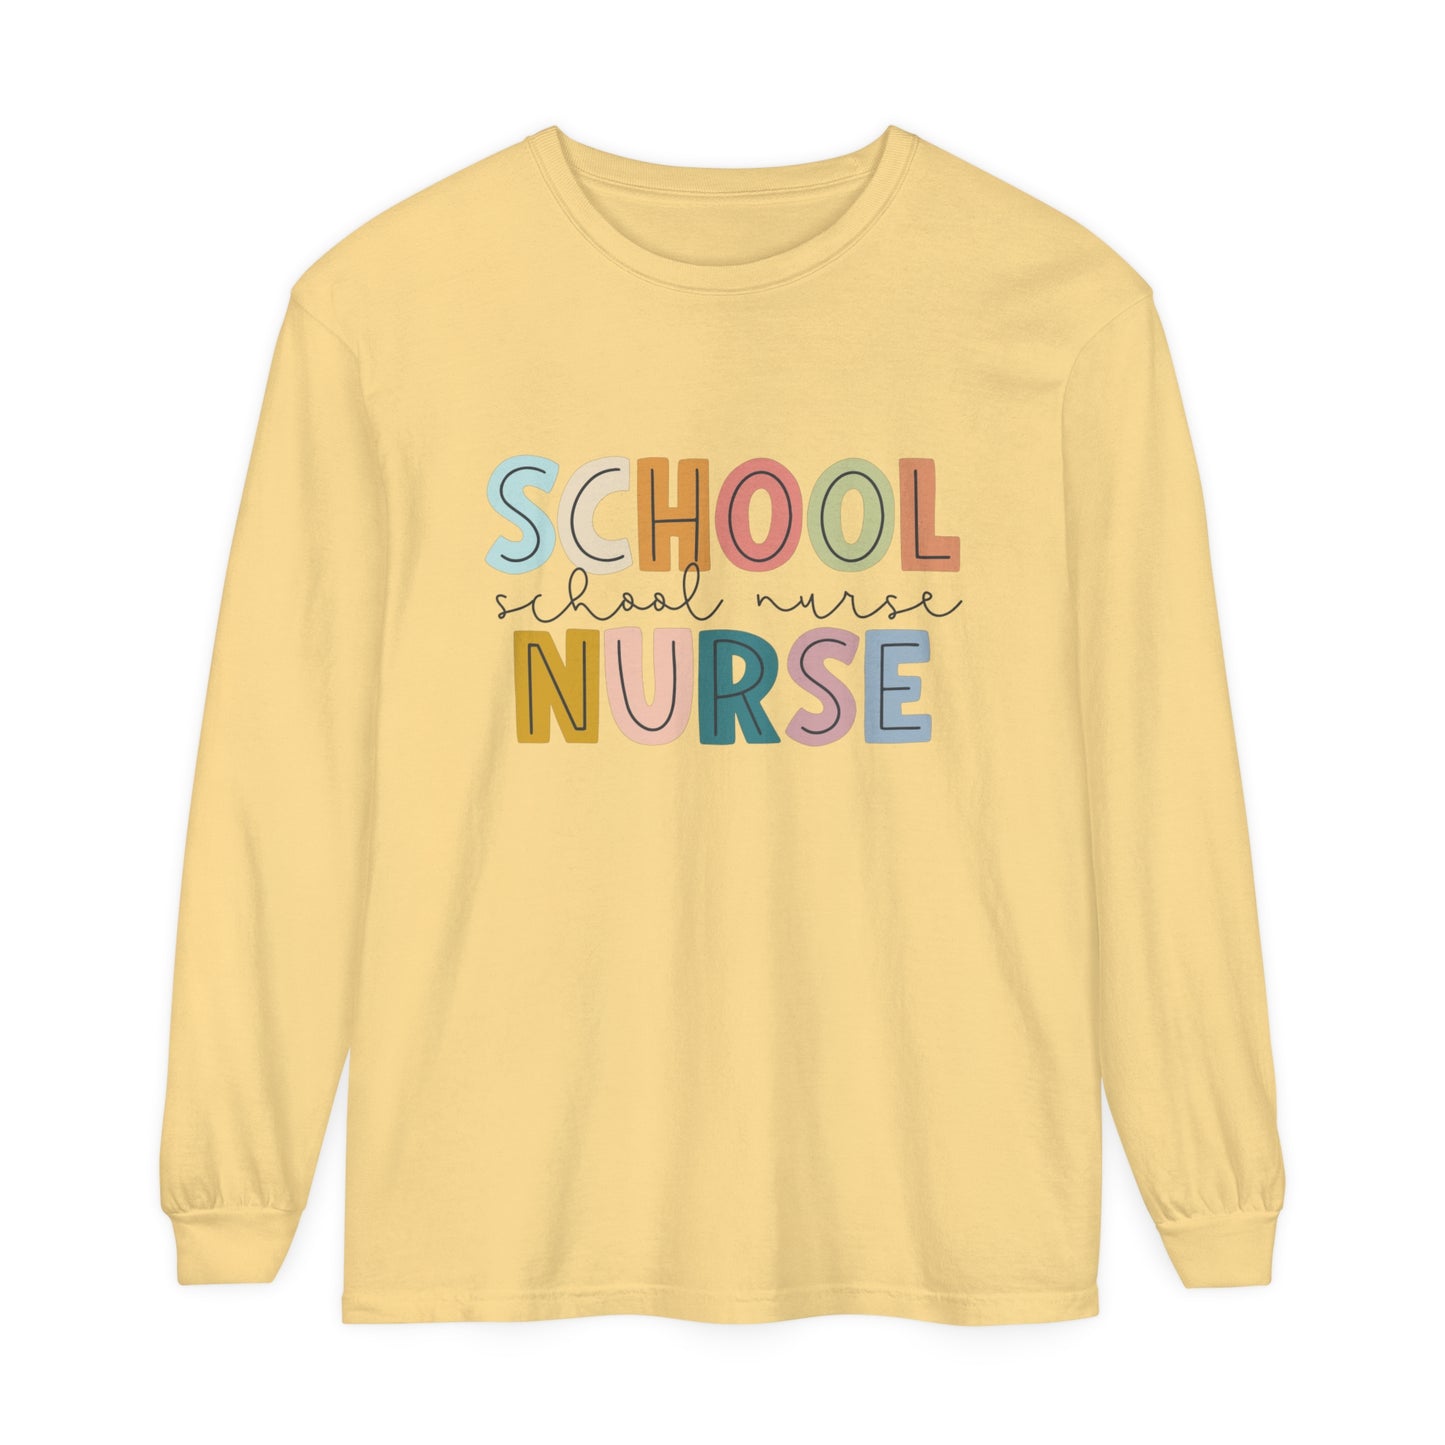 School Nurse Garment-dyed Long Sleeve T-Shirt